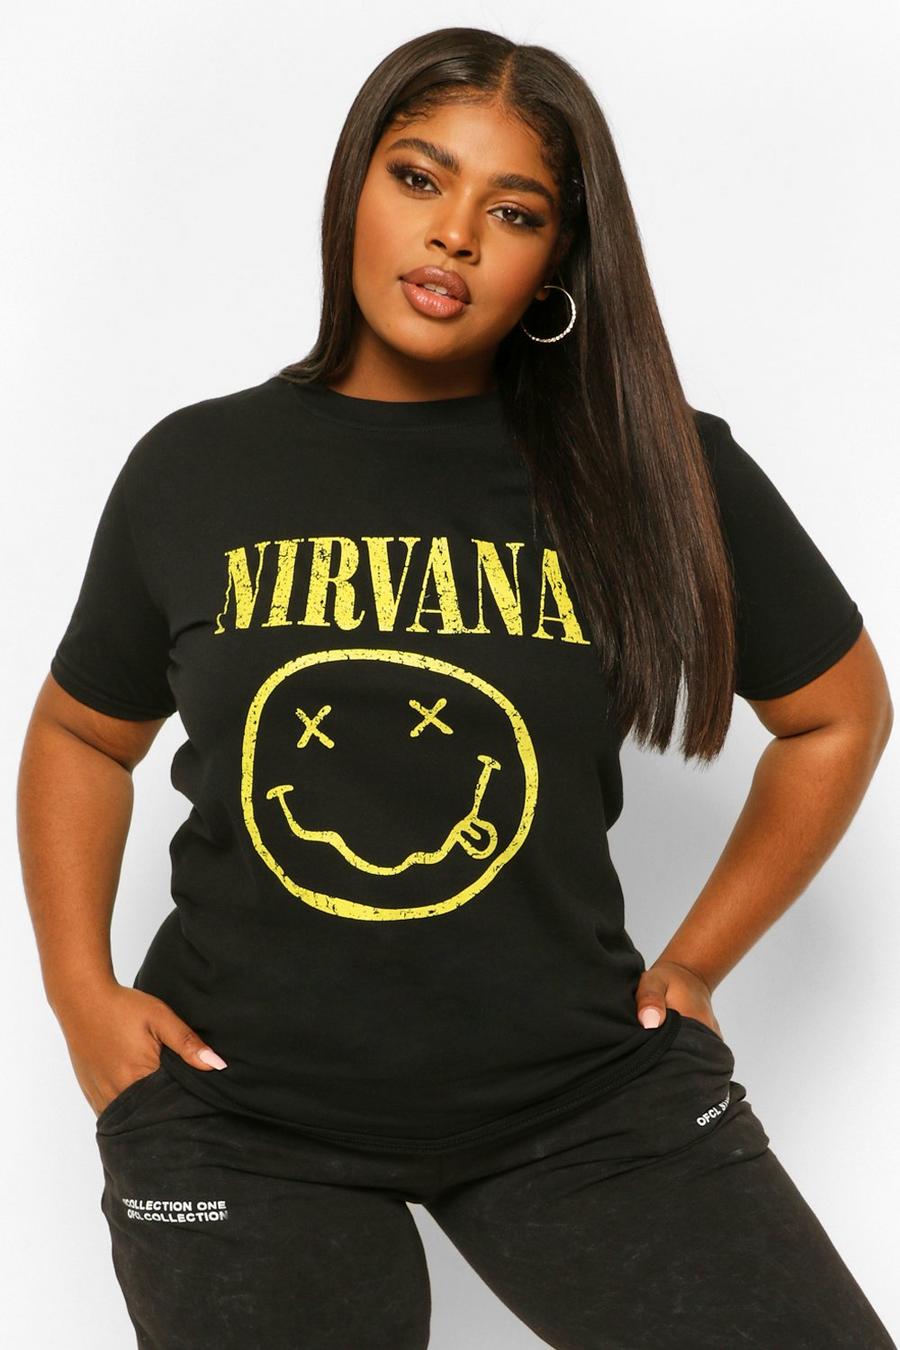 Black svart Plus - Oversize t-shirt med Nirvana-tryck och smiley